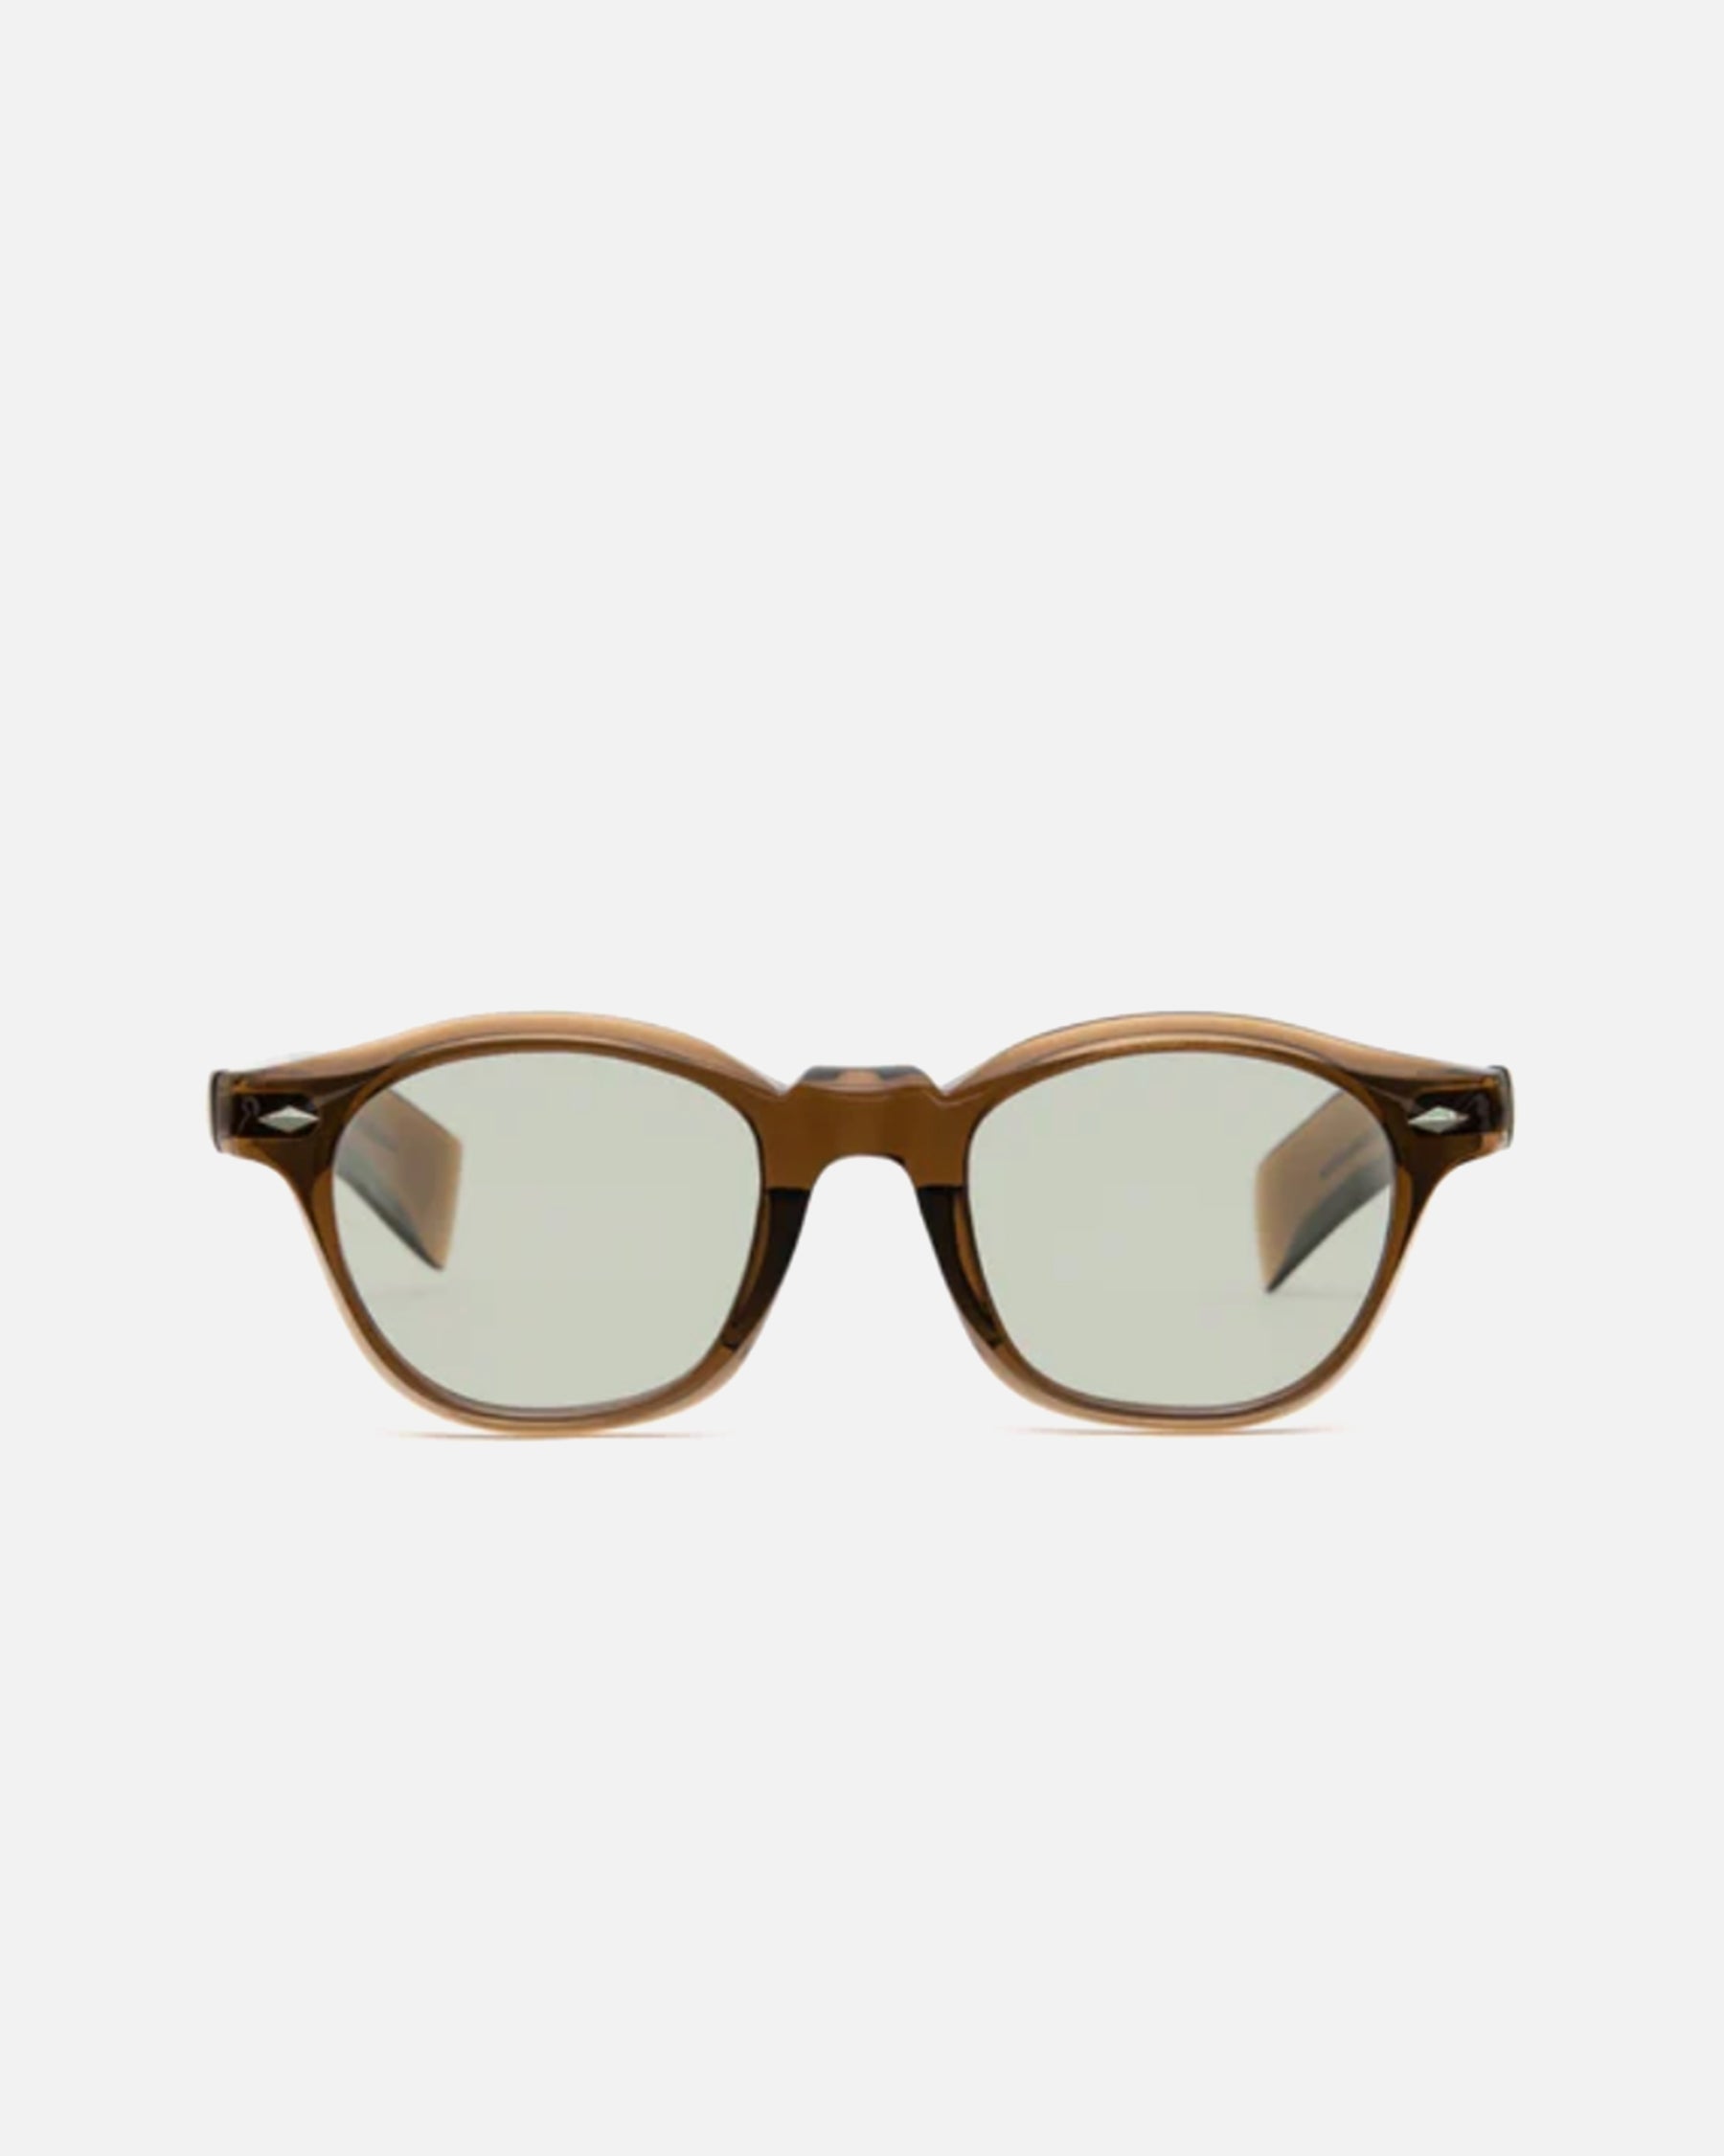 gp-12 Sunglasses whisky/ Lens: Green